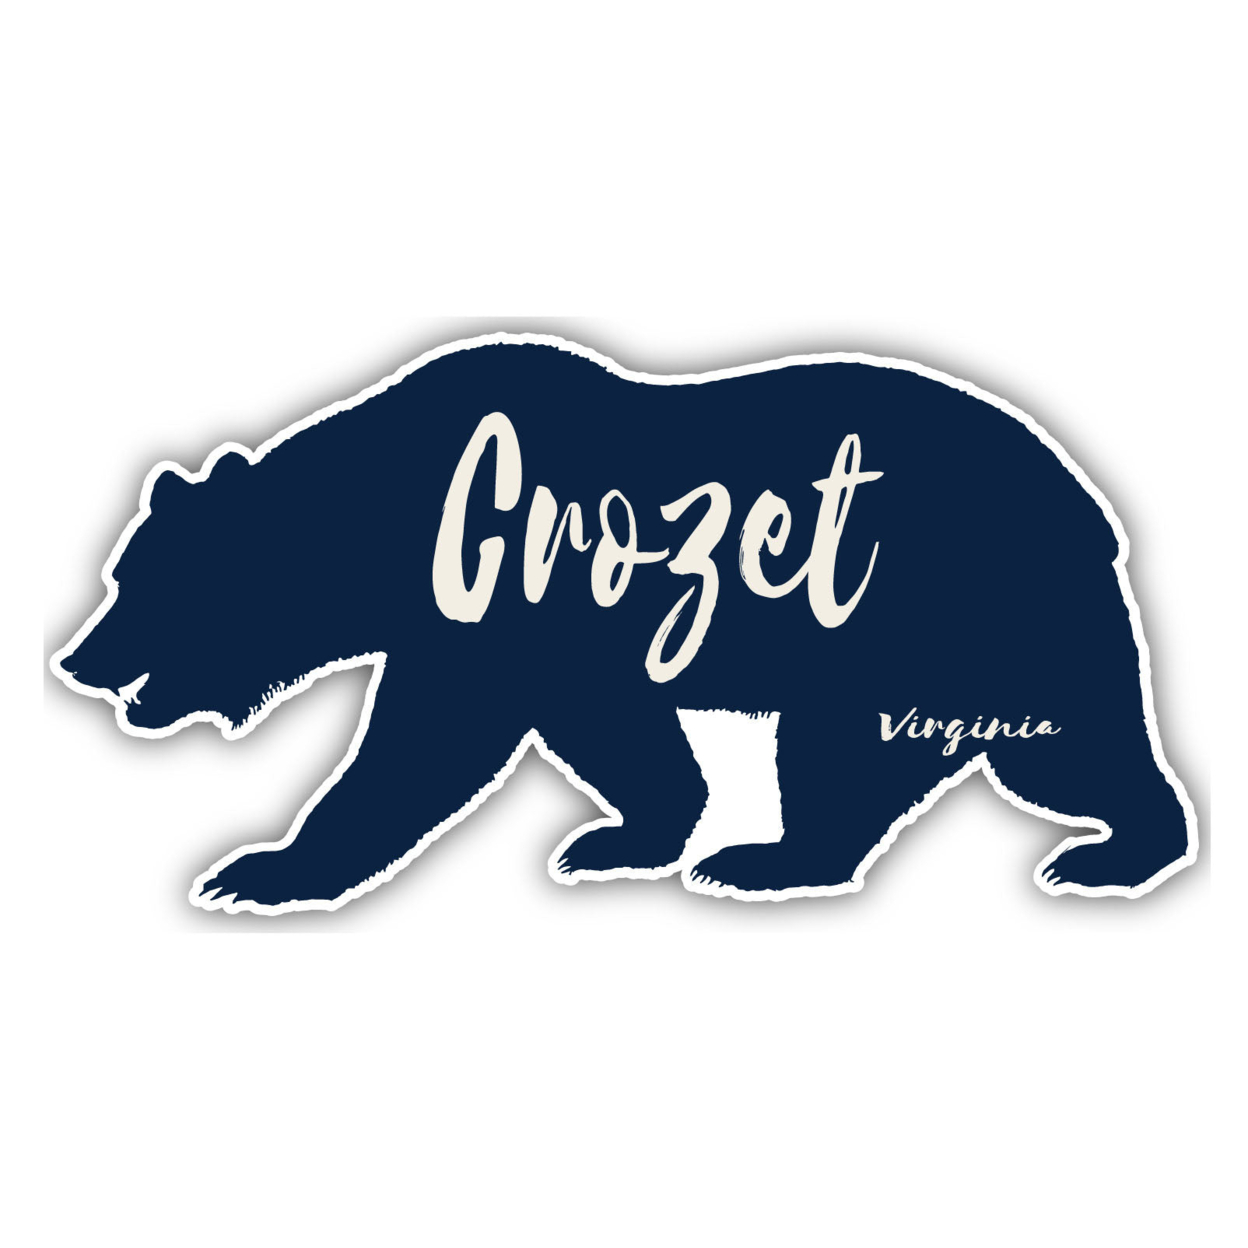 Crozet Virginia Souvenir Decorative Stickers (Choose Theme And Size) - Single Unit, 8-Inch, Bear